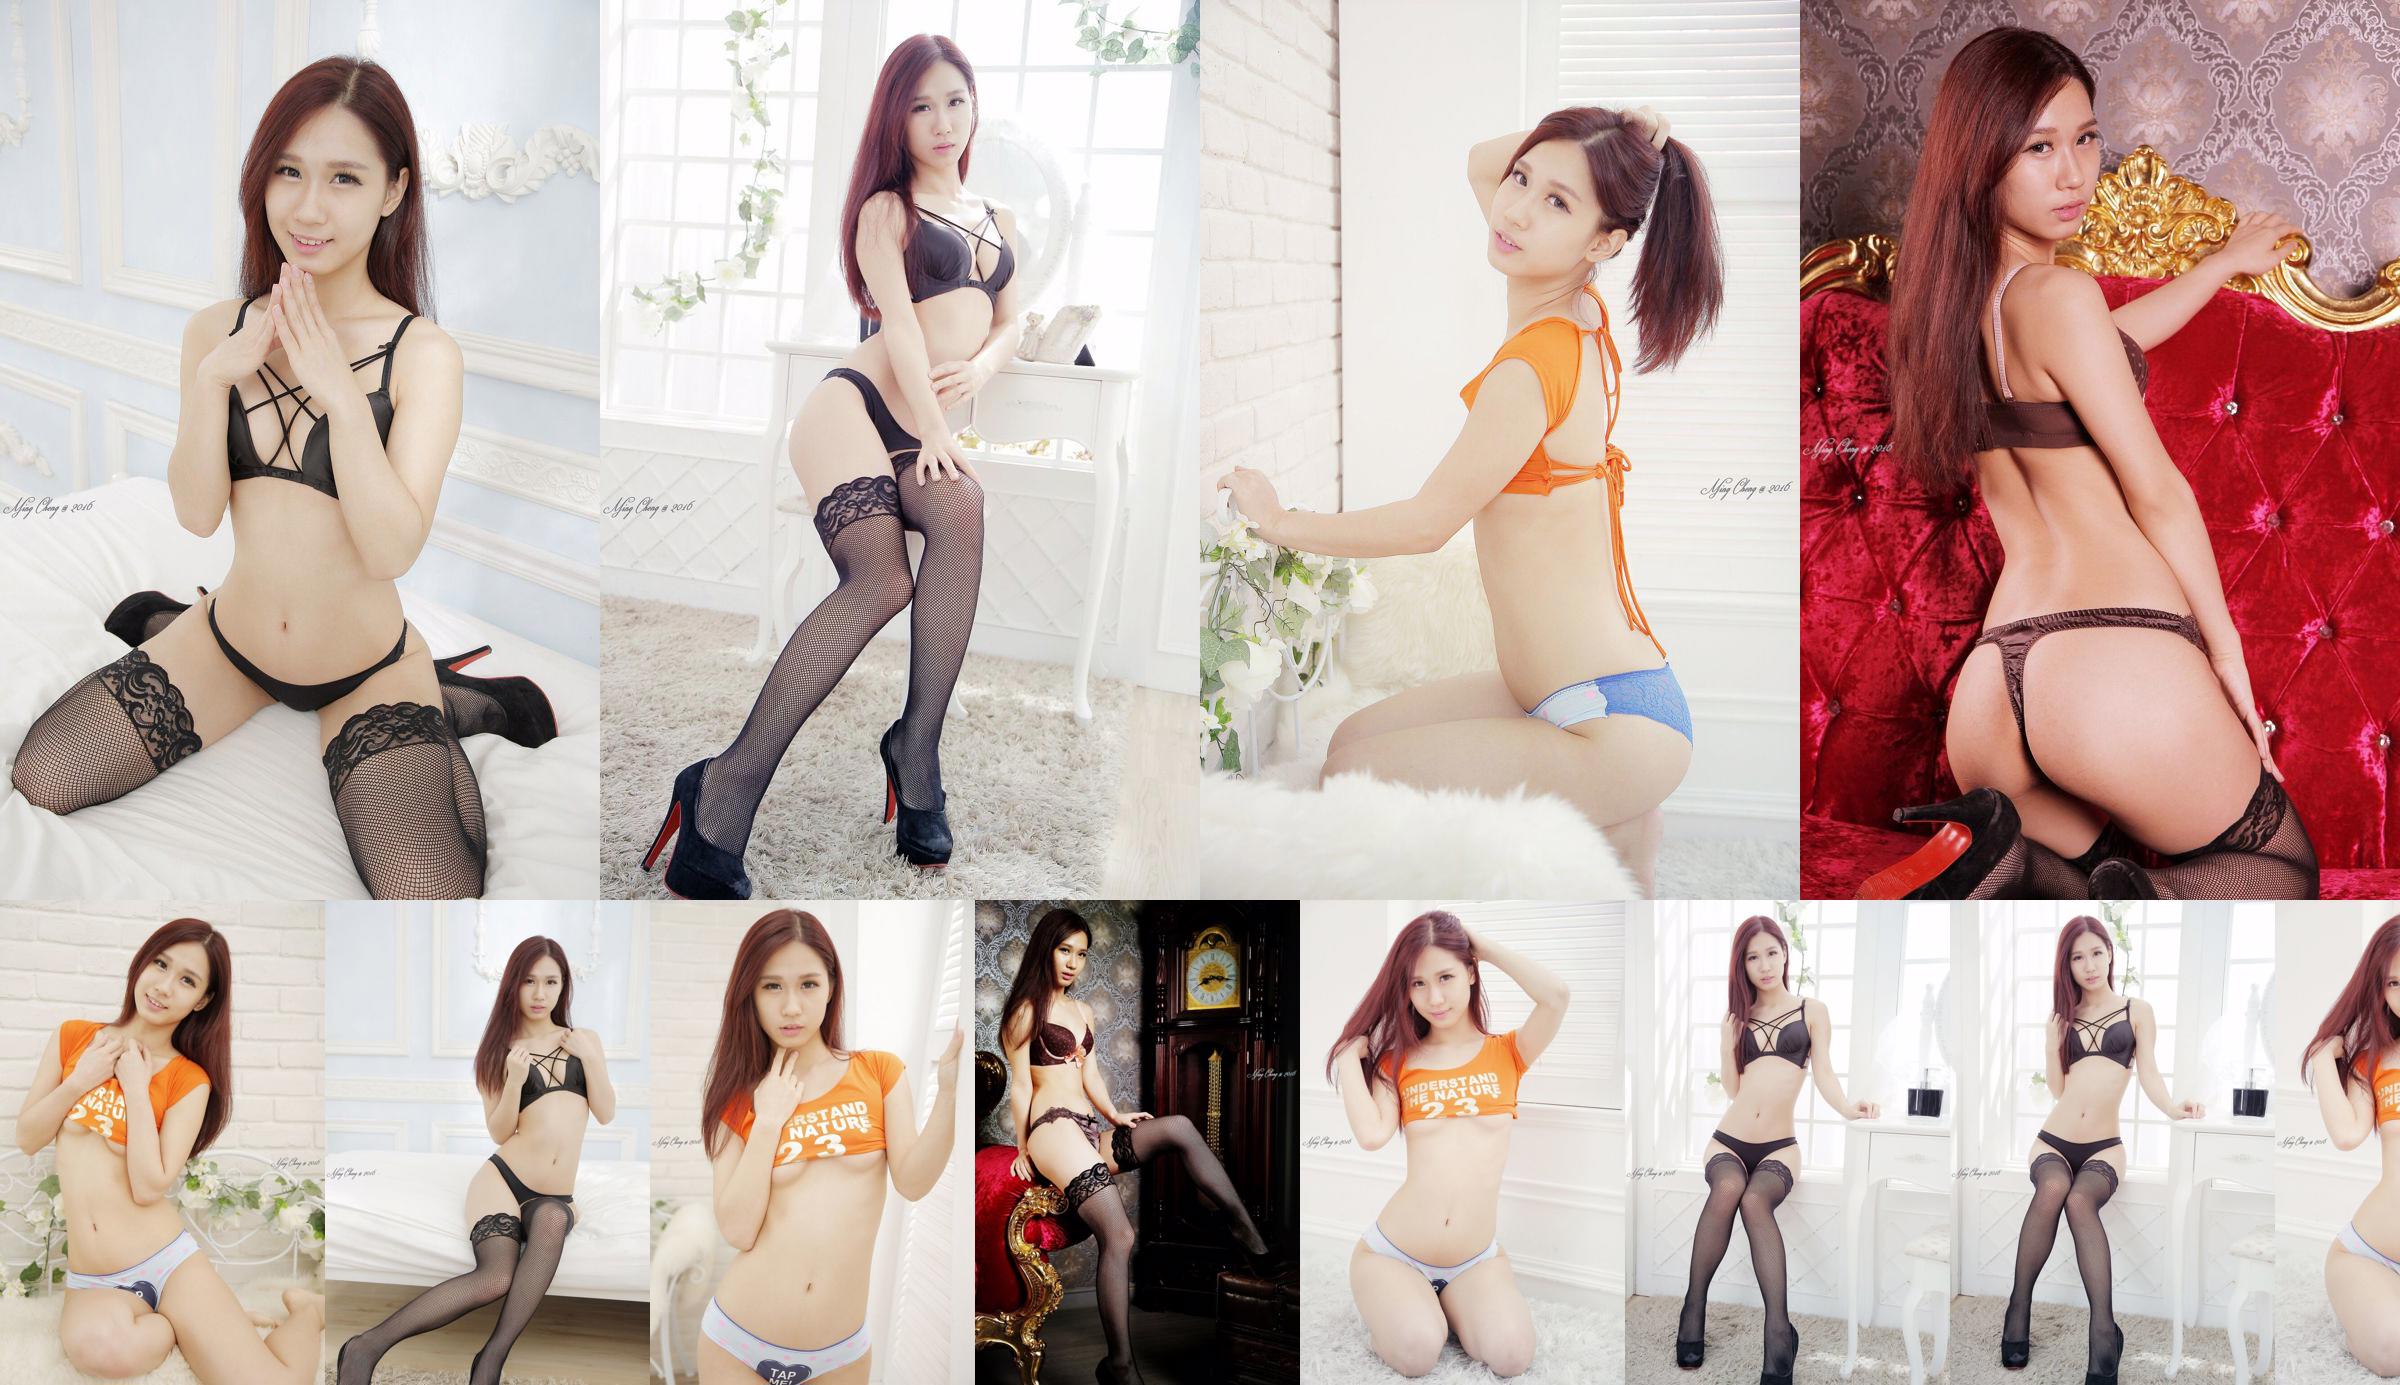 [Taiwan Zhengmei] Belle underwear studio shooting No.0b876f Page 1